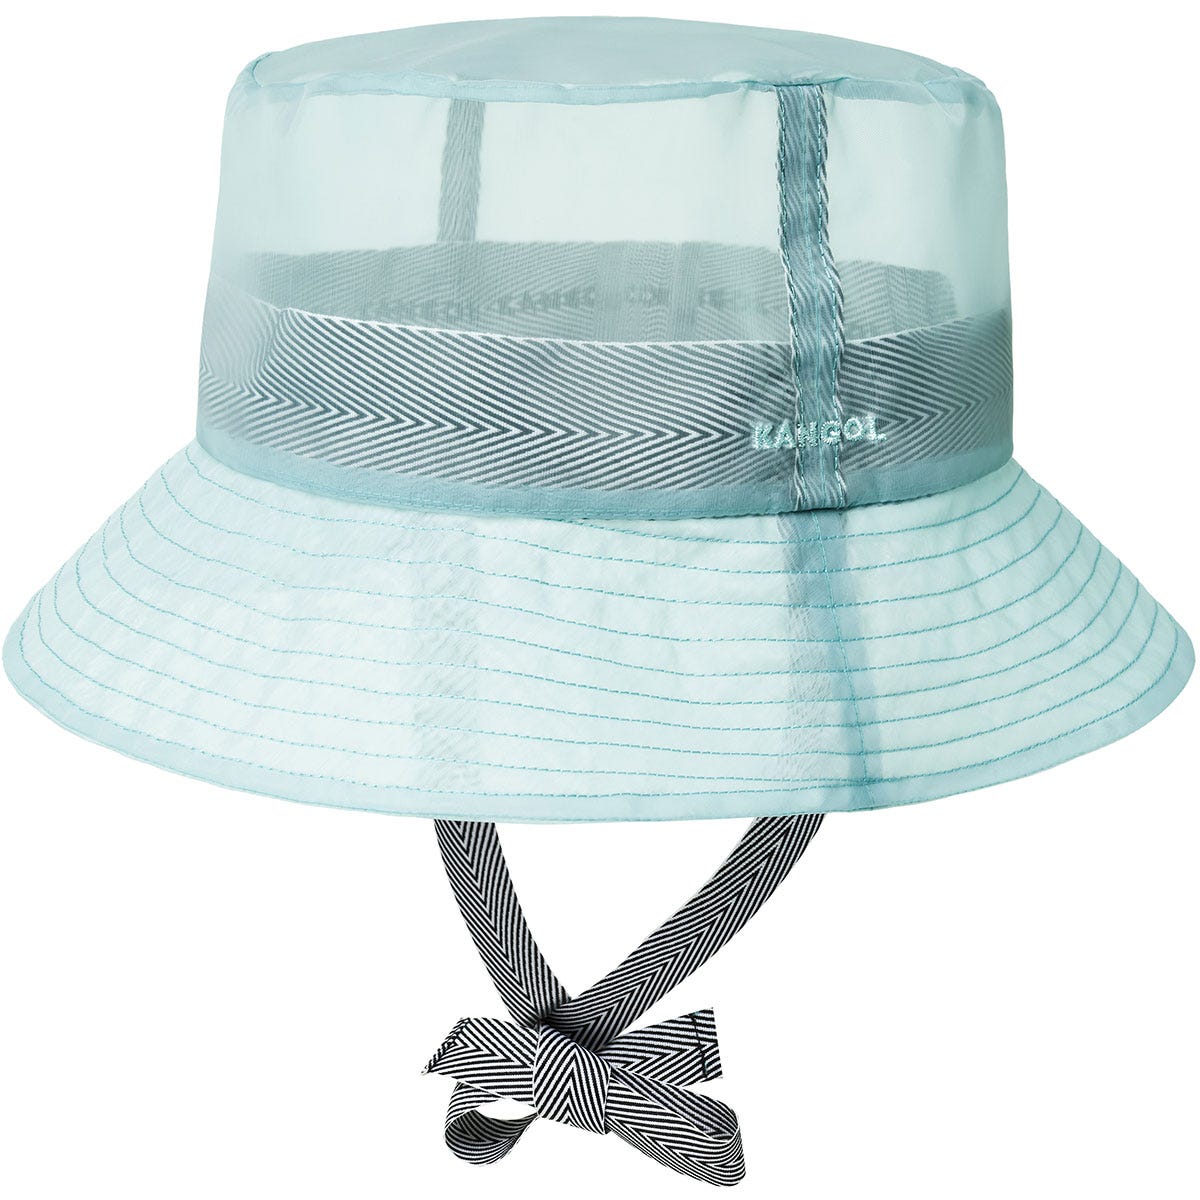 Kangol unisex chapeau transparent bucket mint sweet mint s